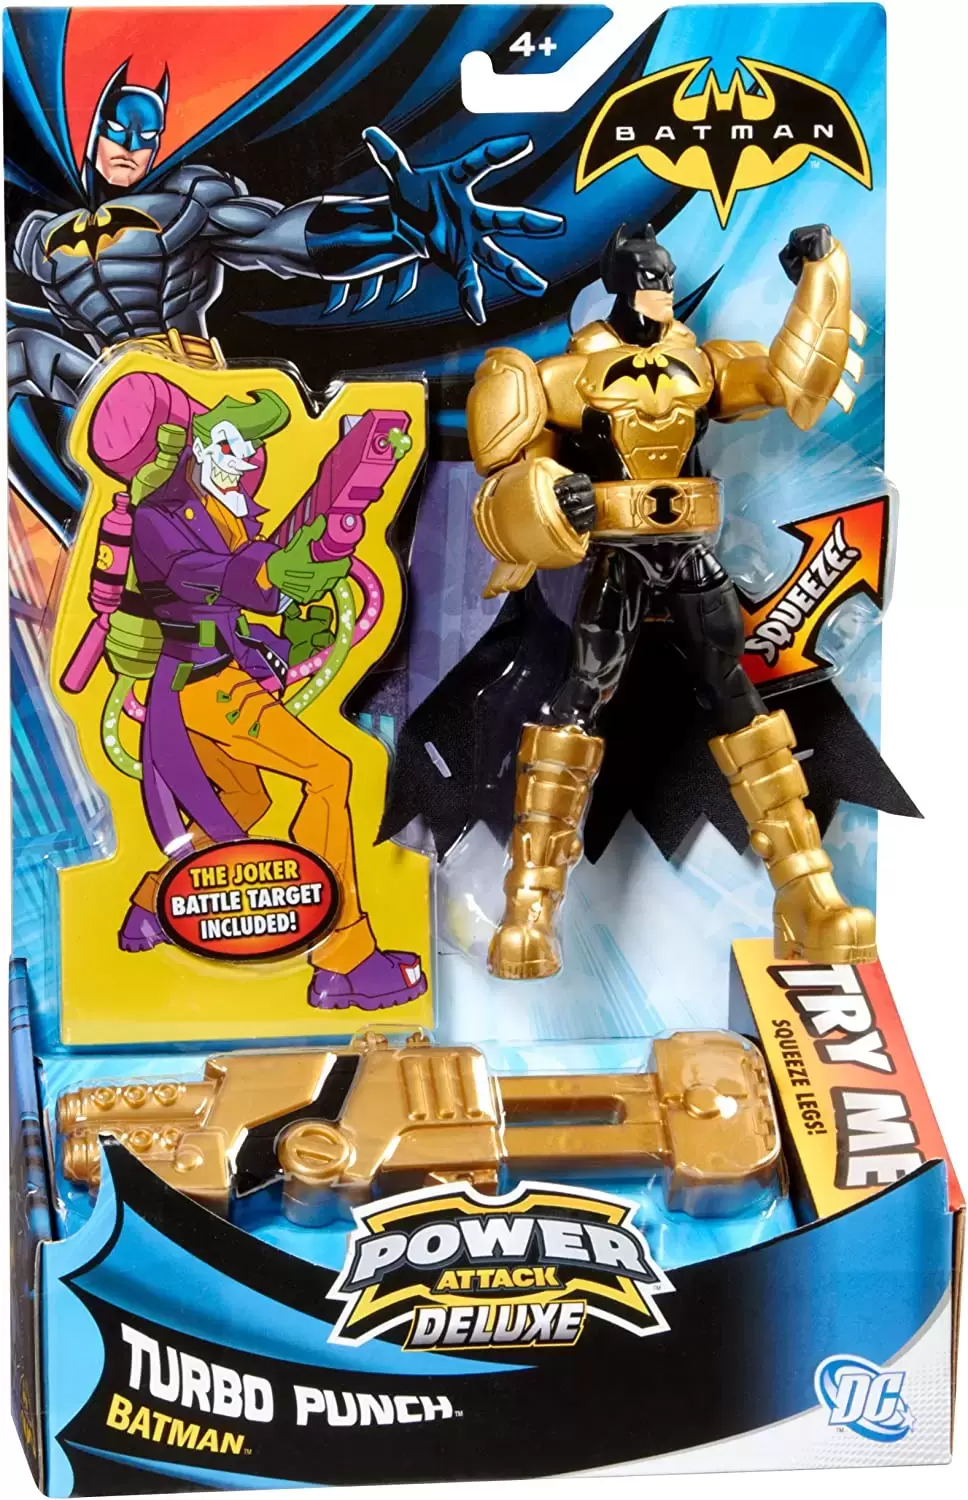 Batman - Batman Turbo Punch